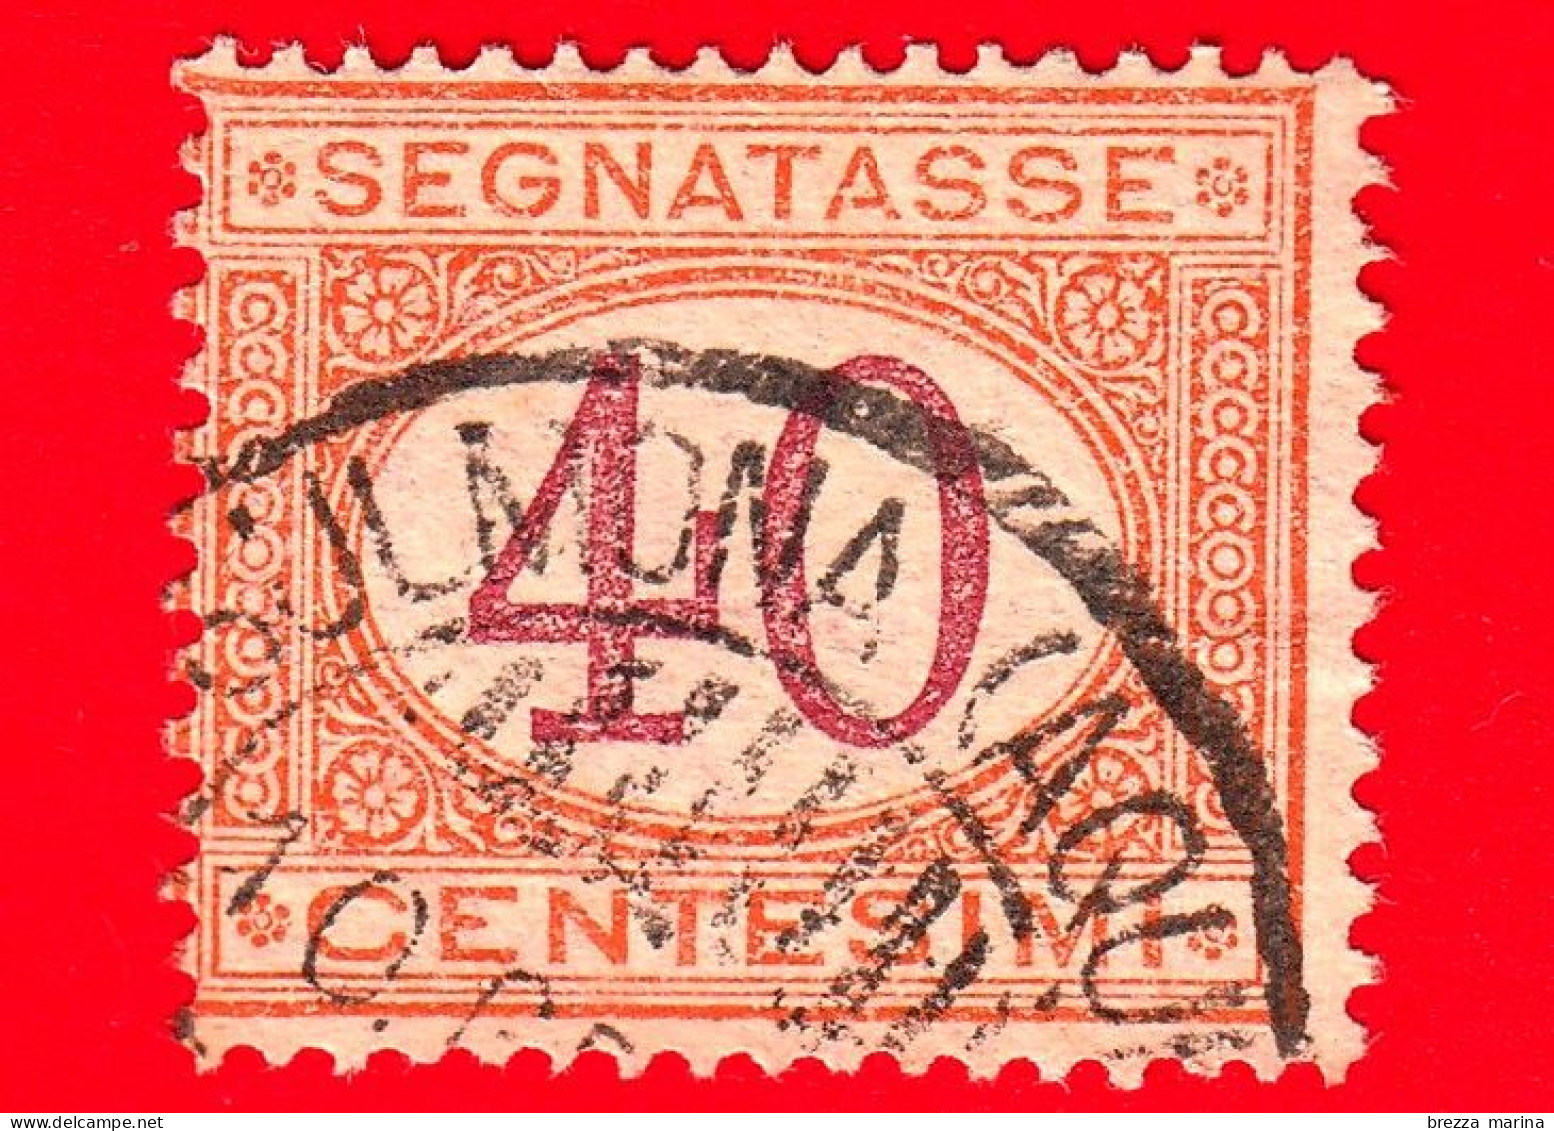 ITALIA - Usato -  1870 - 1890 - Segnatasse - Cifra Entro Un Ovale - 40 C. - Postage Due